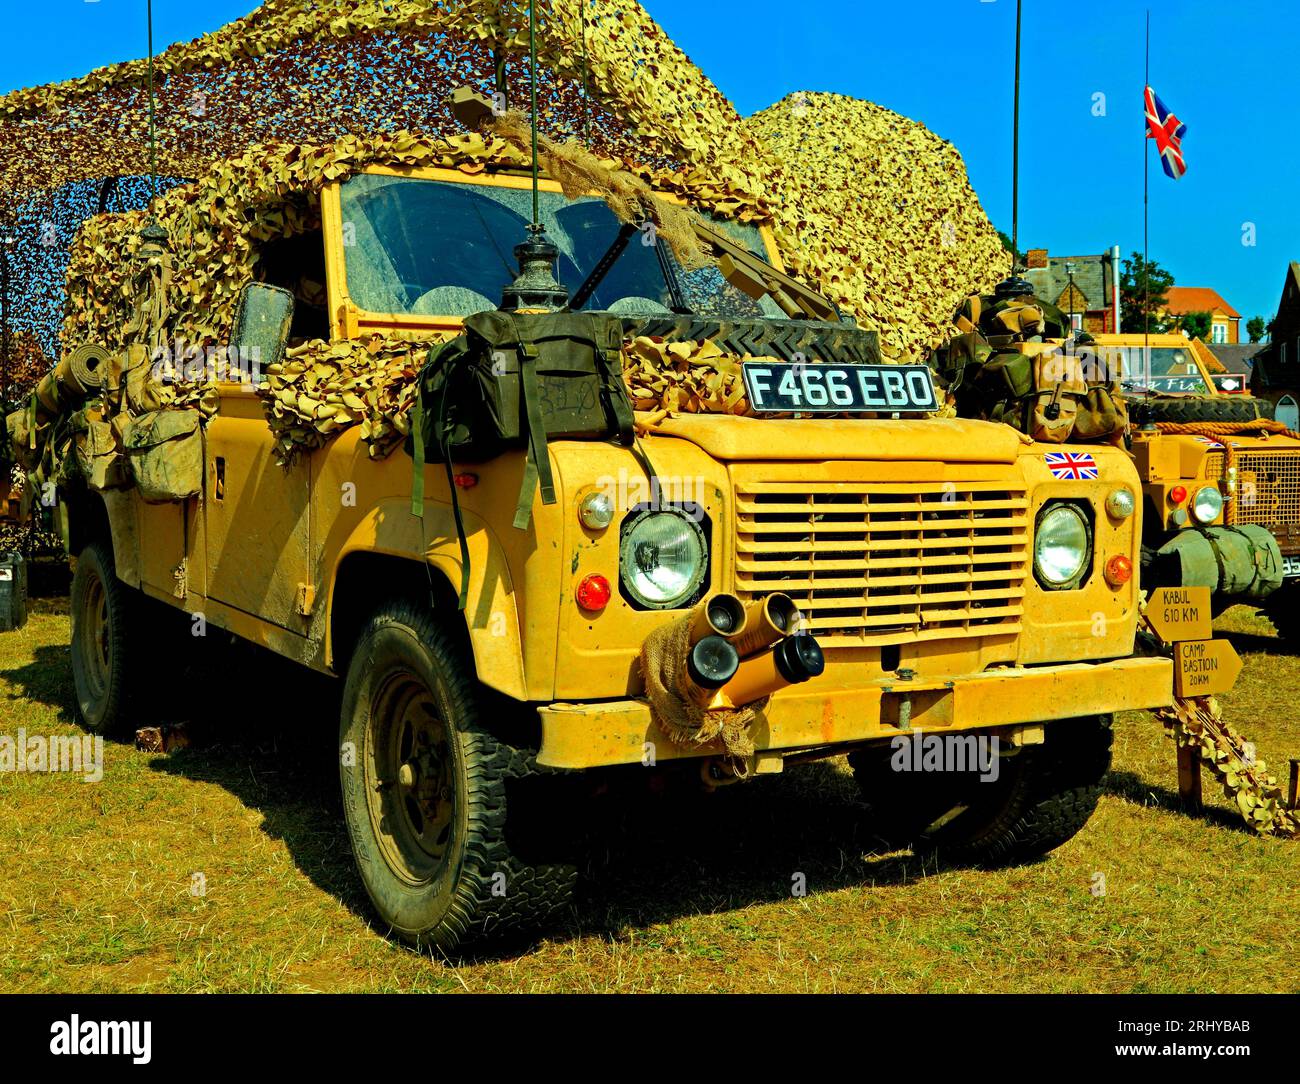 British 1980s Military Vehicle, Jeep, vintage, British Army, camouflage netting, tent Stock Photo